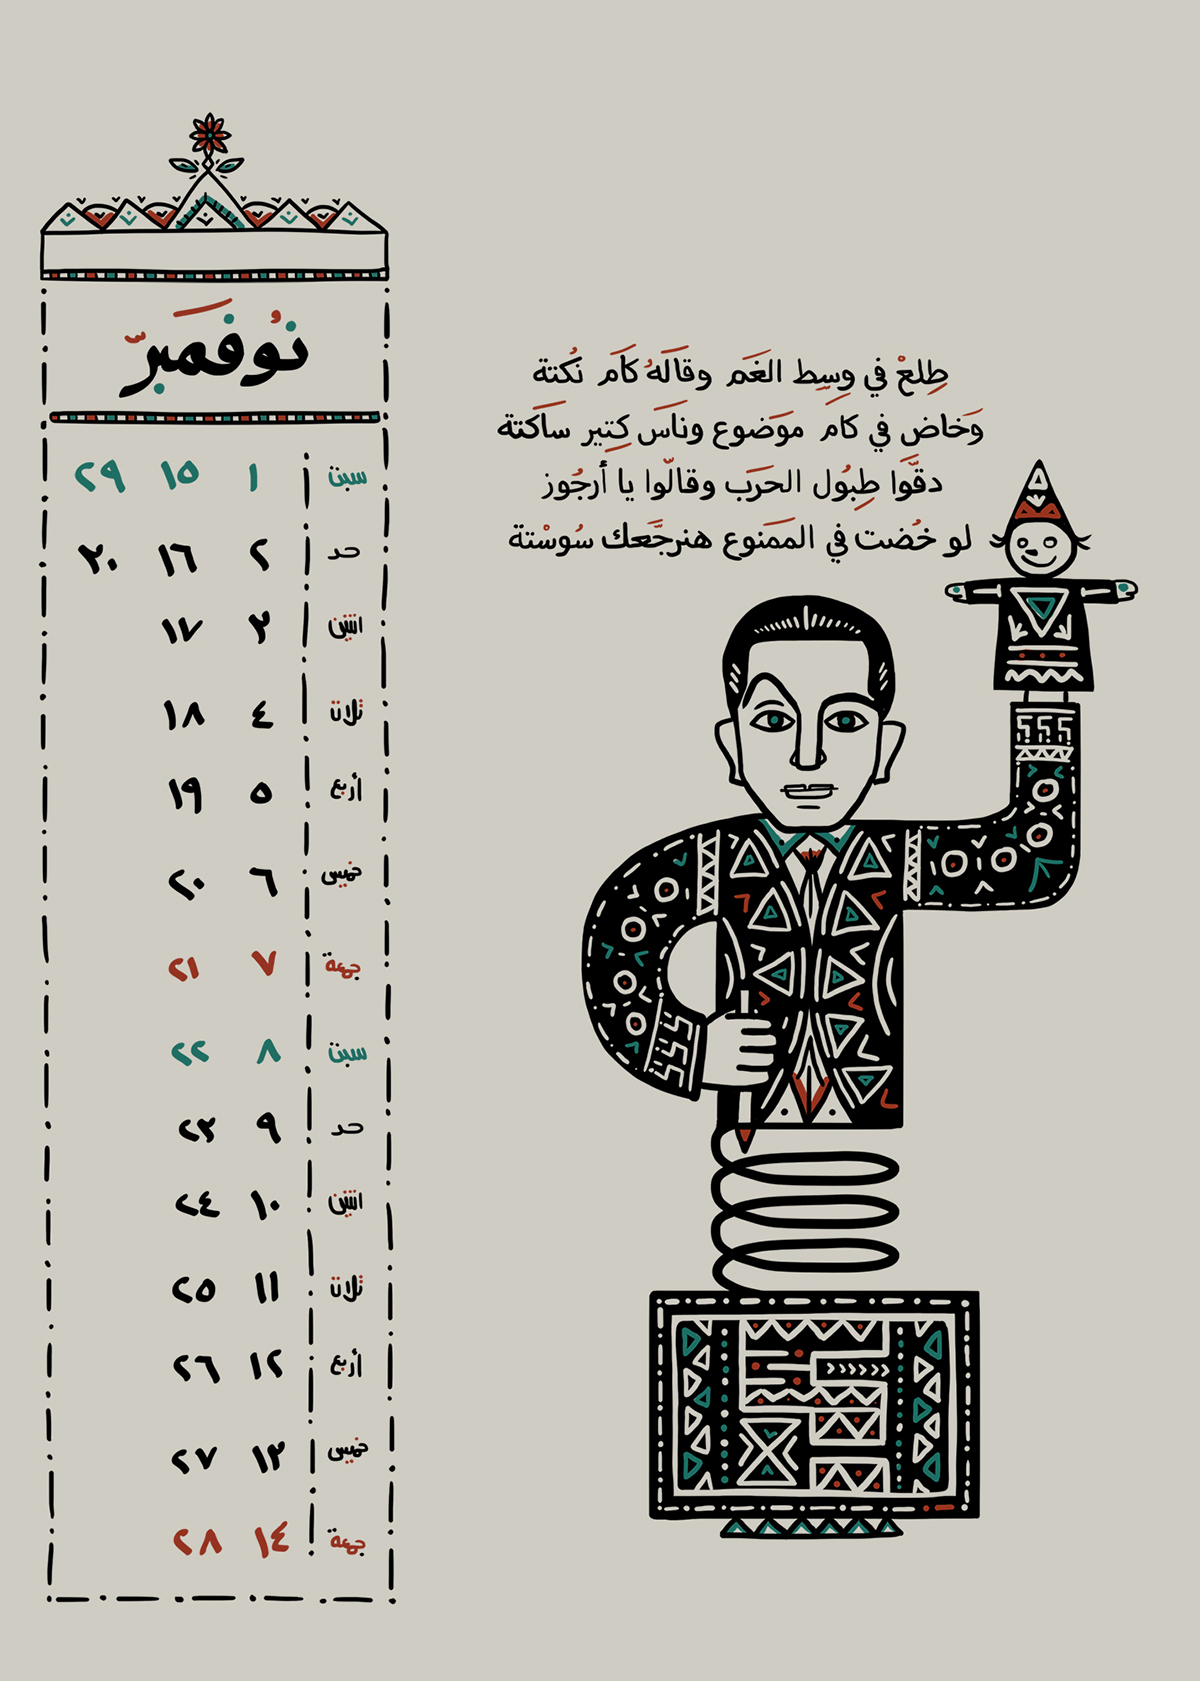 calendar cairo egypt Character tattoo art pop popart popular paper craft arabic characters pattern black ink